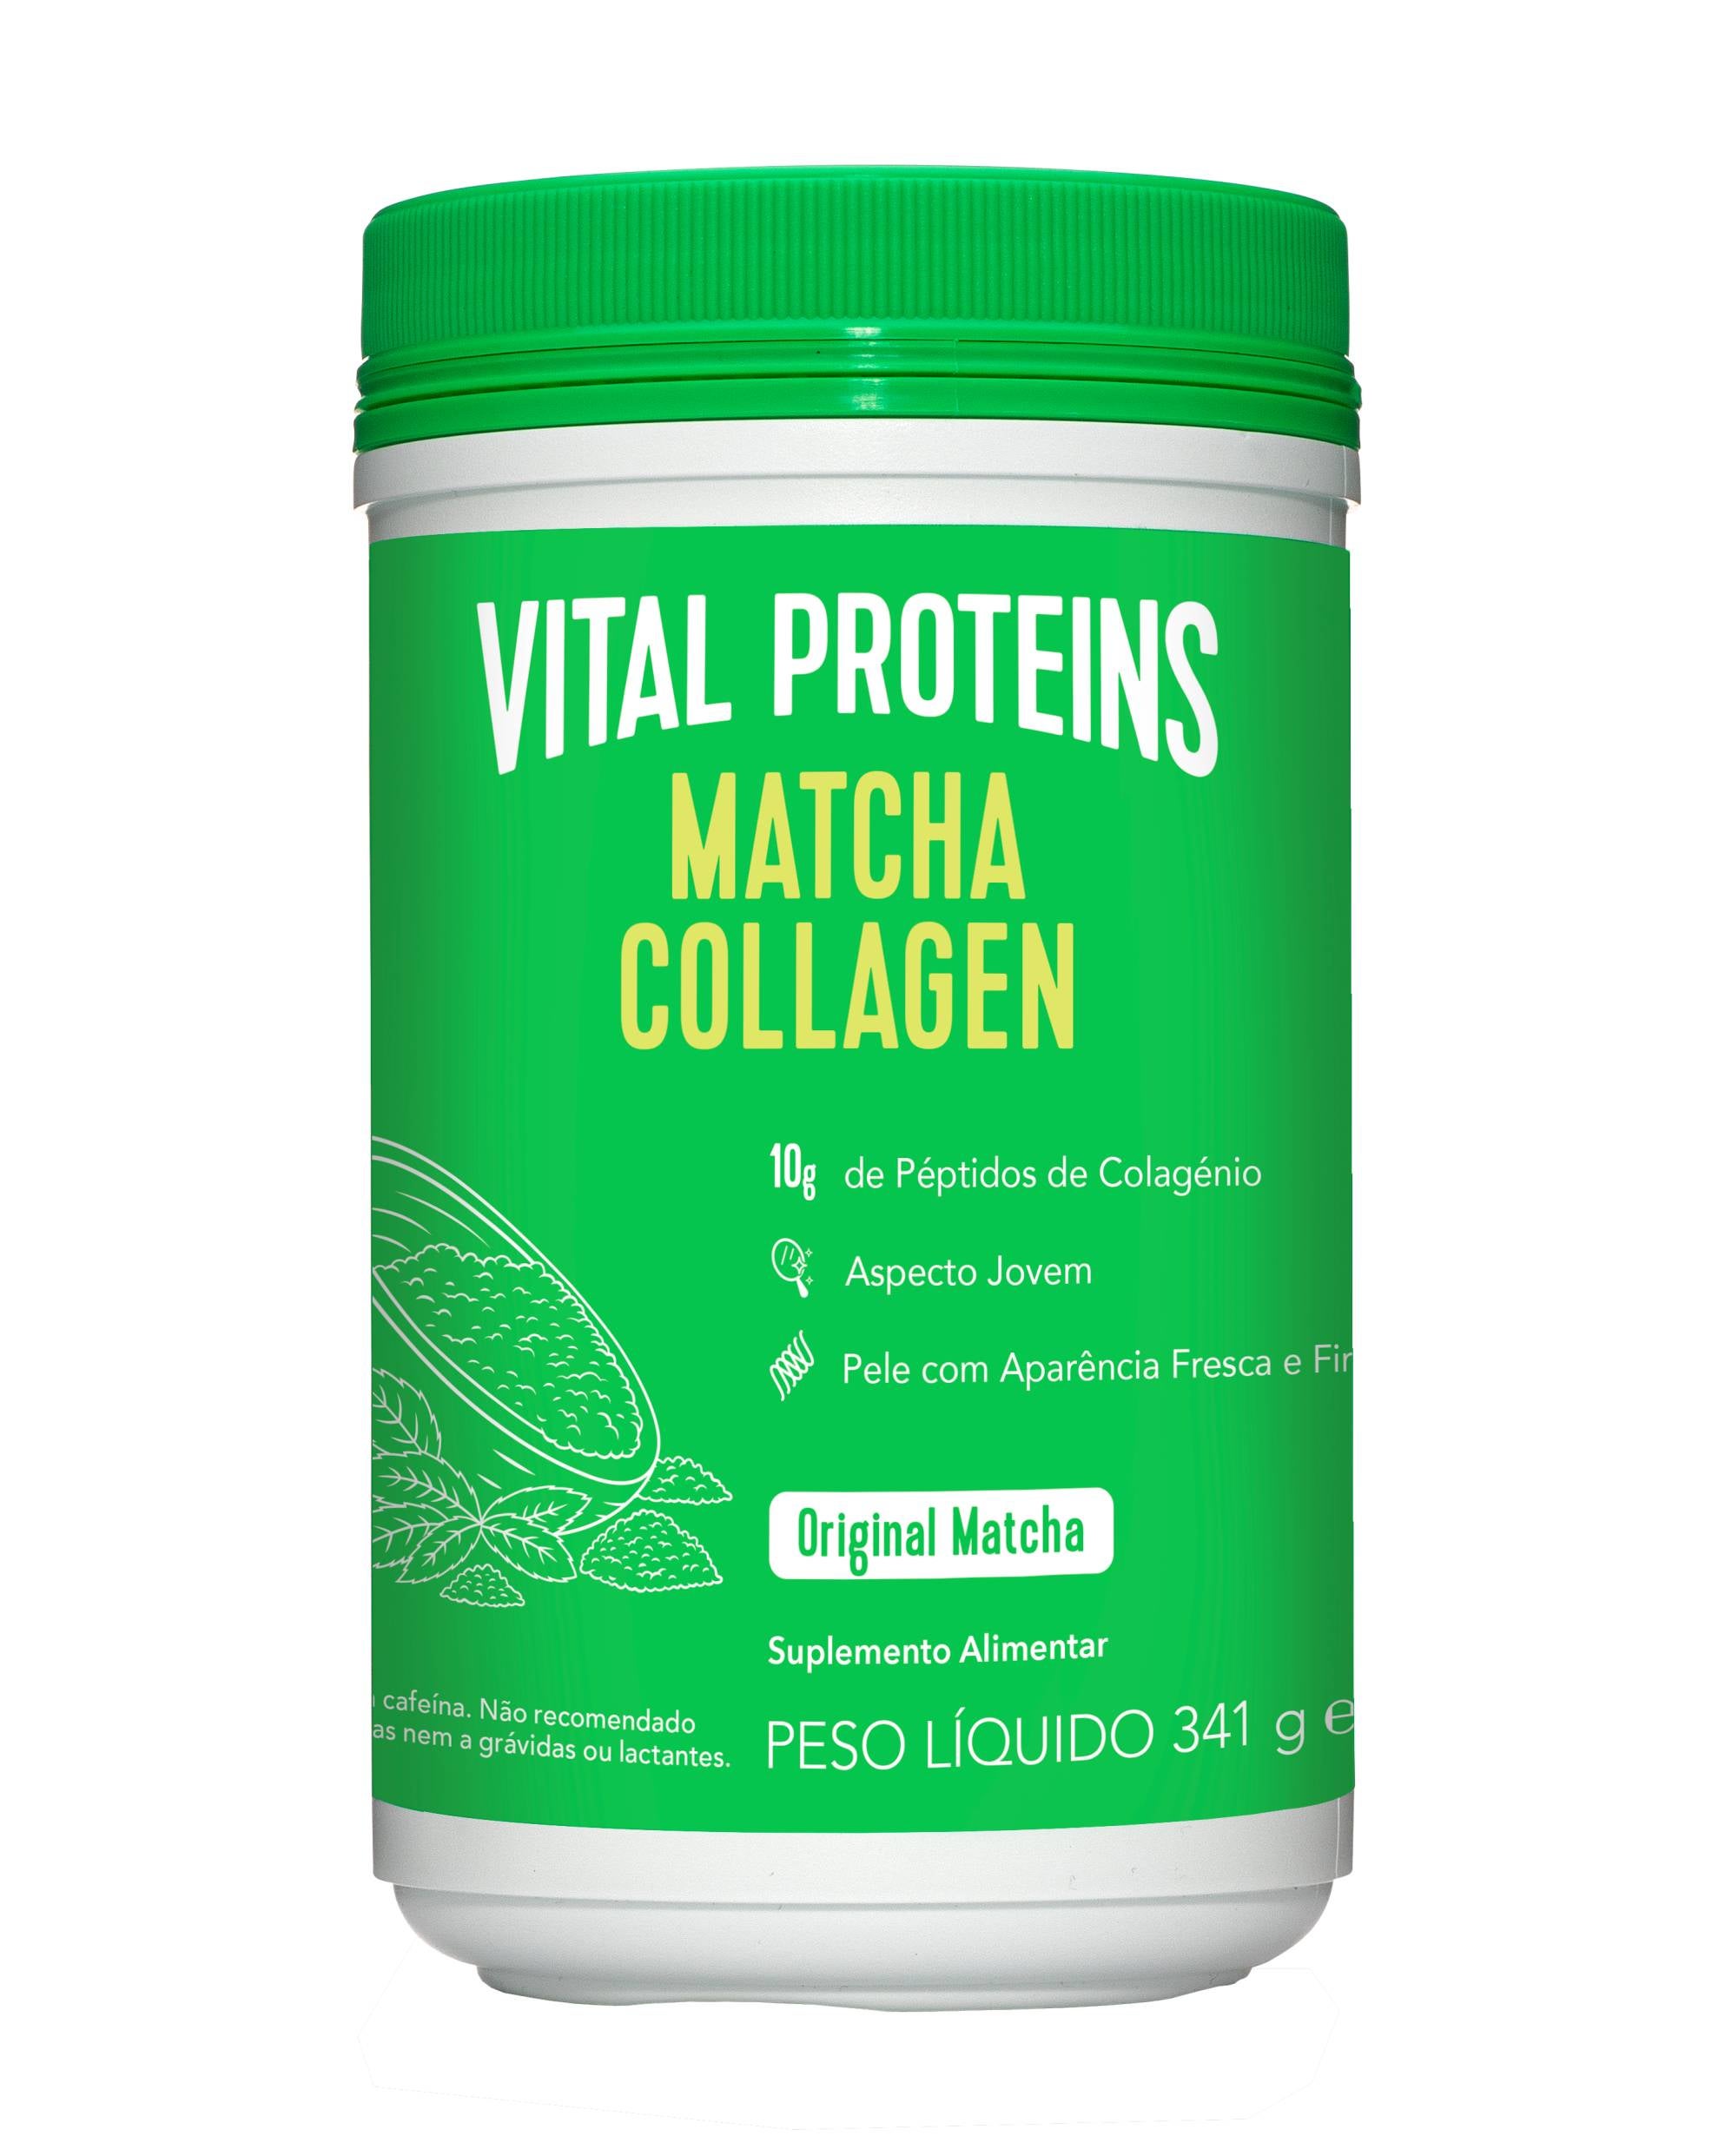 Vital Proteins colagénio matcha